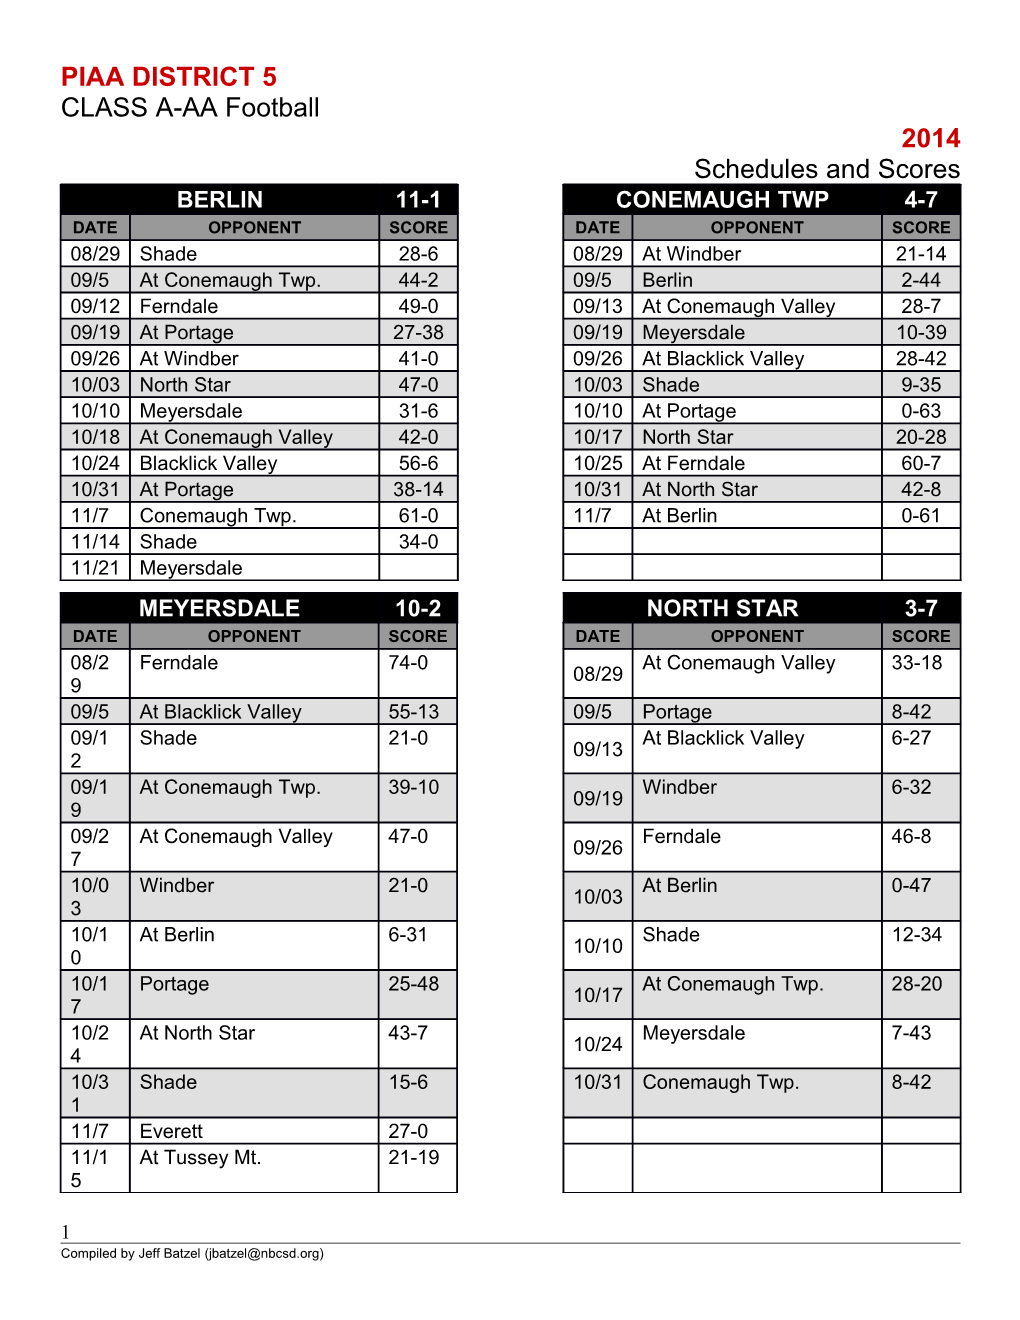 ICC 2004 Football Schedules